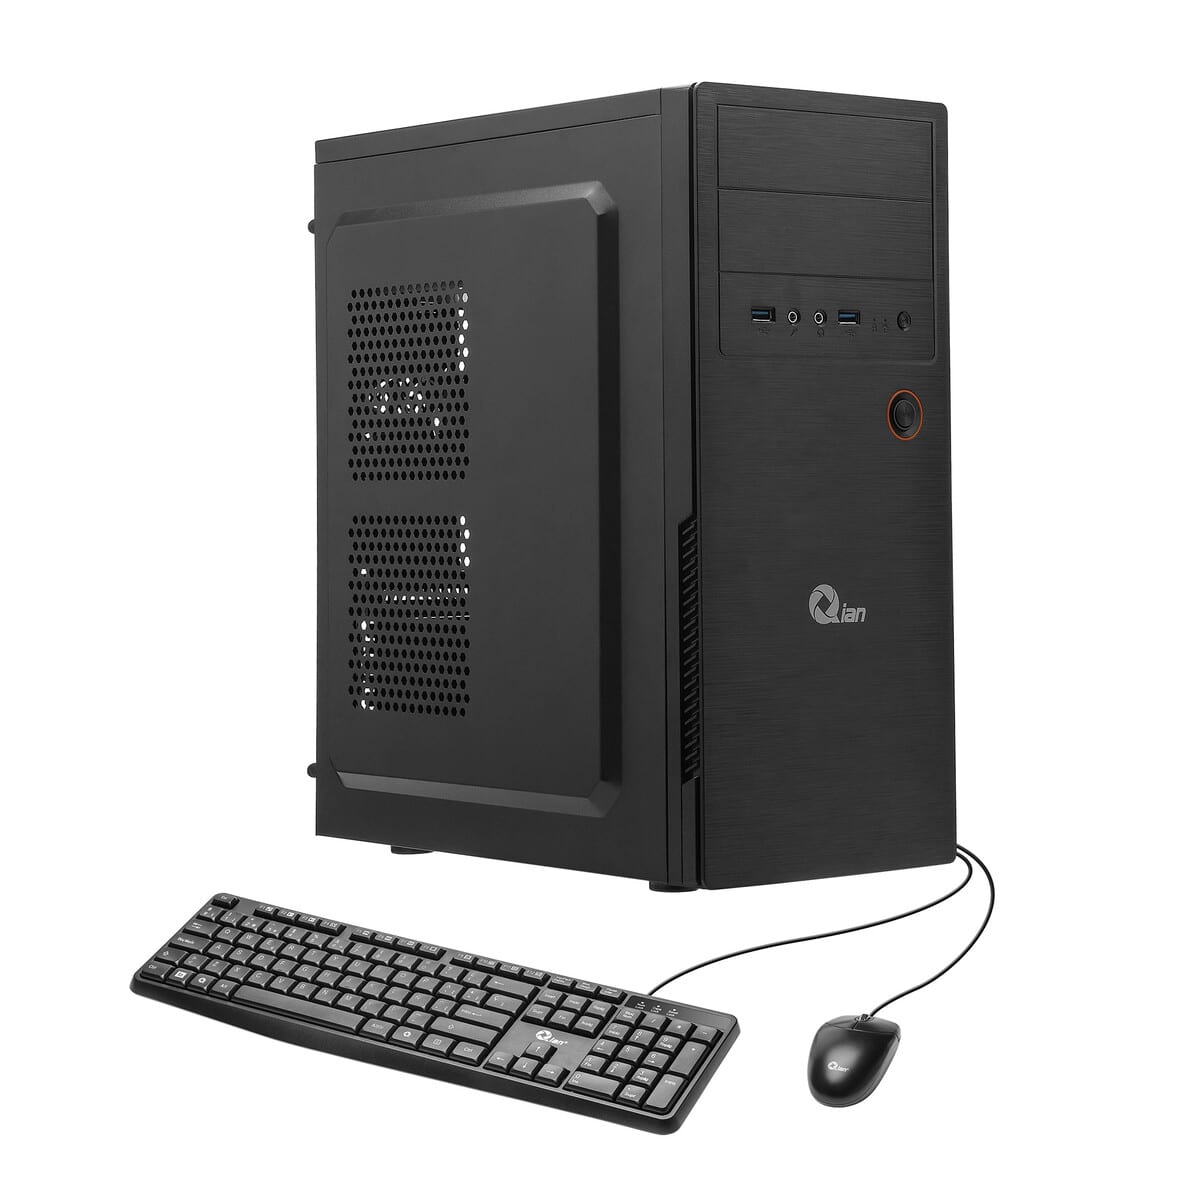 Desktop Qian Qpi Opci01 01 Core I5  16Gb Ddr4  480 Ssd  H610M E  T M - QIAN